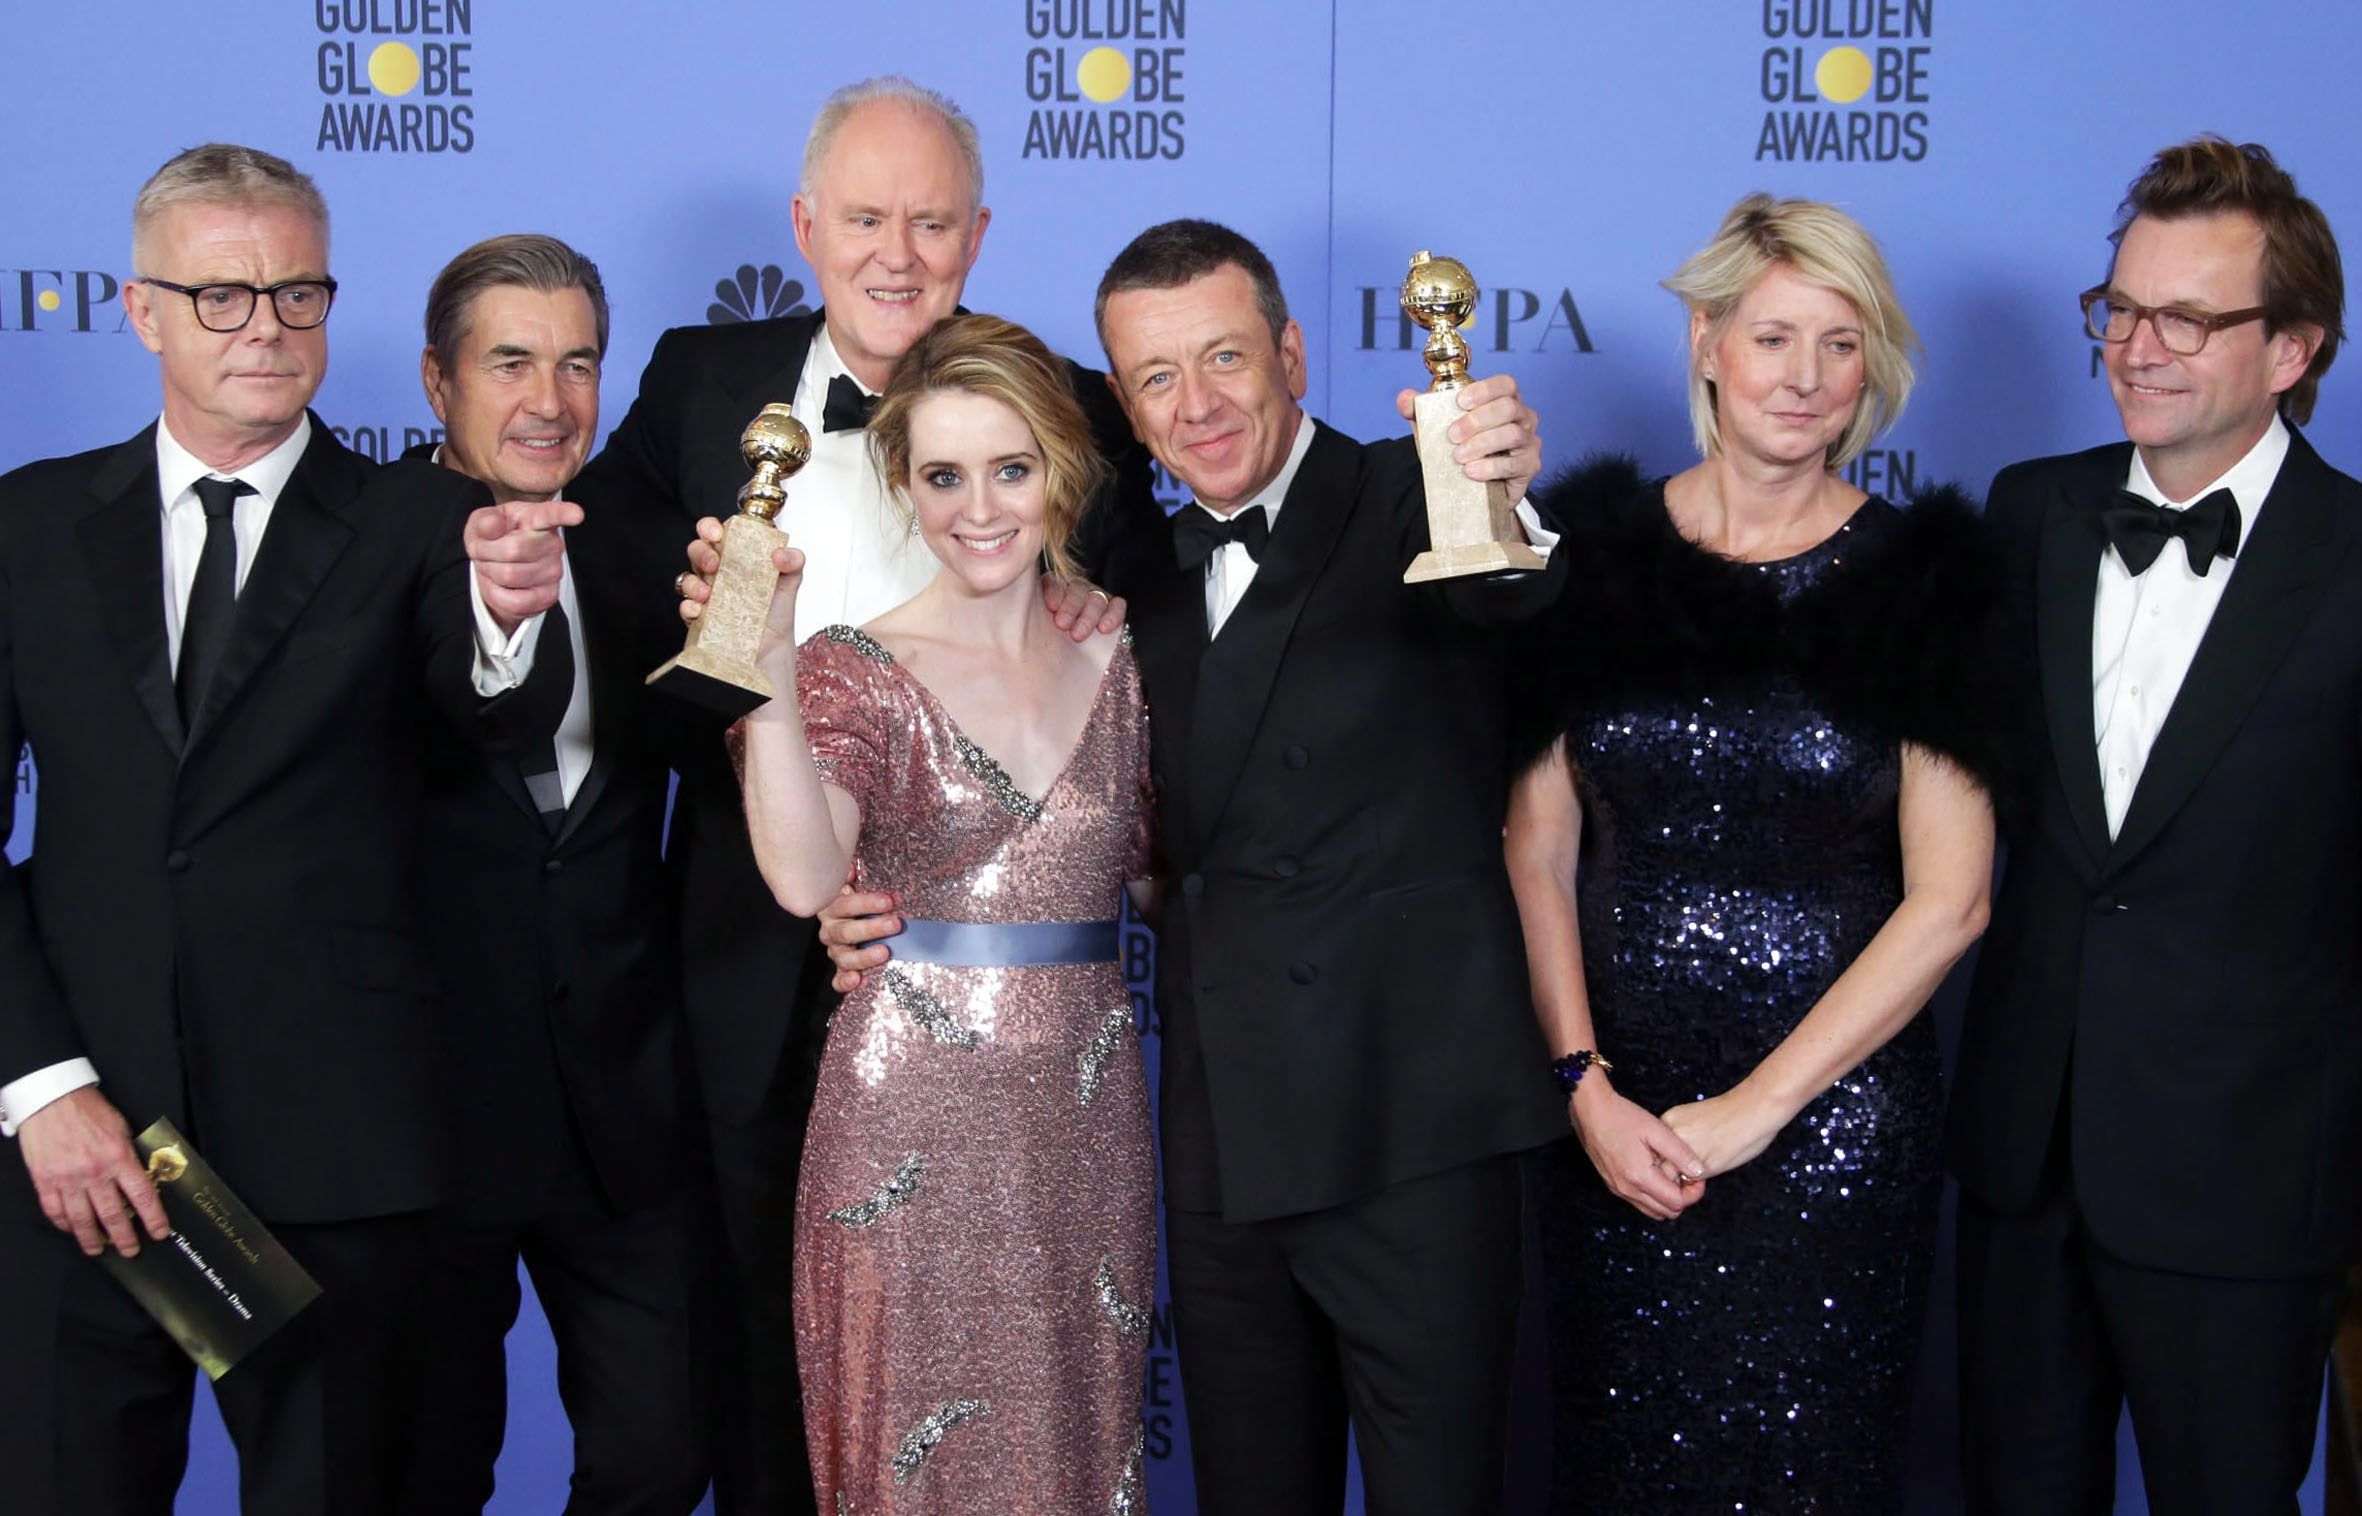 'The Crown' i 'Atlanta' s'imposen en televisió als Globus d'Or